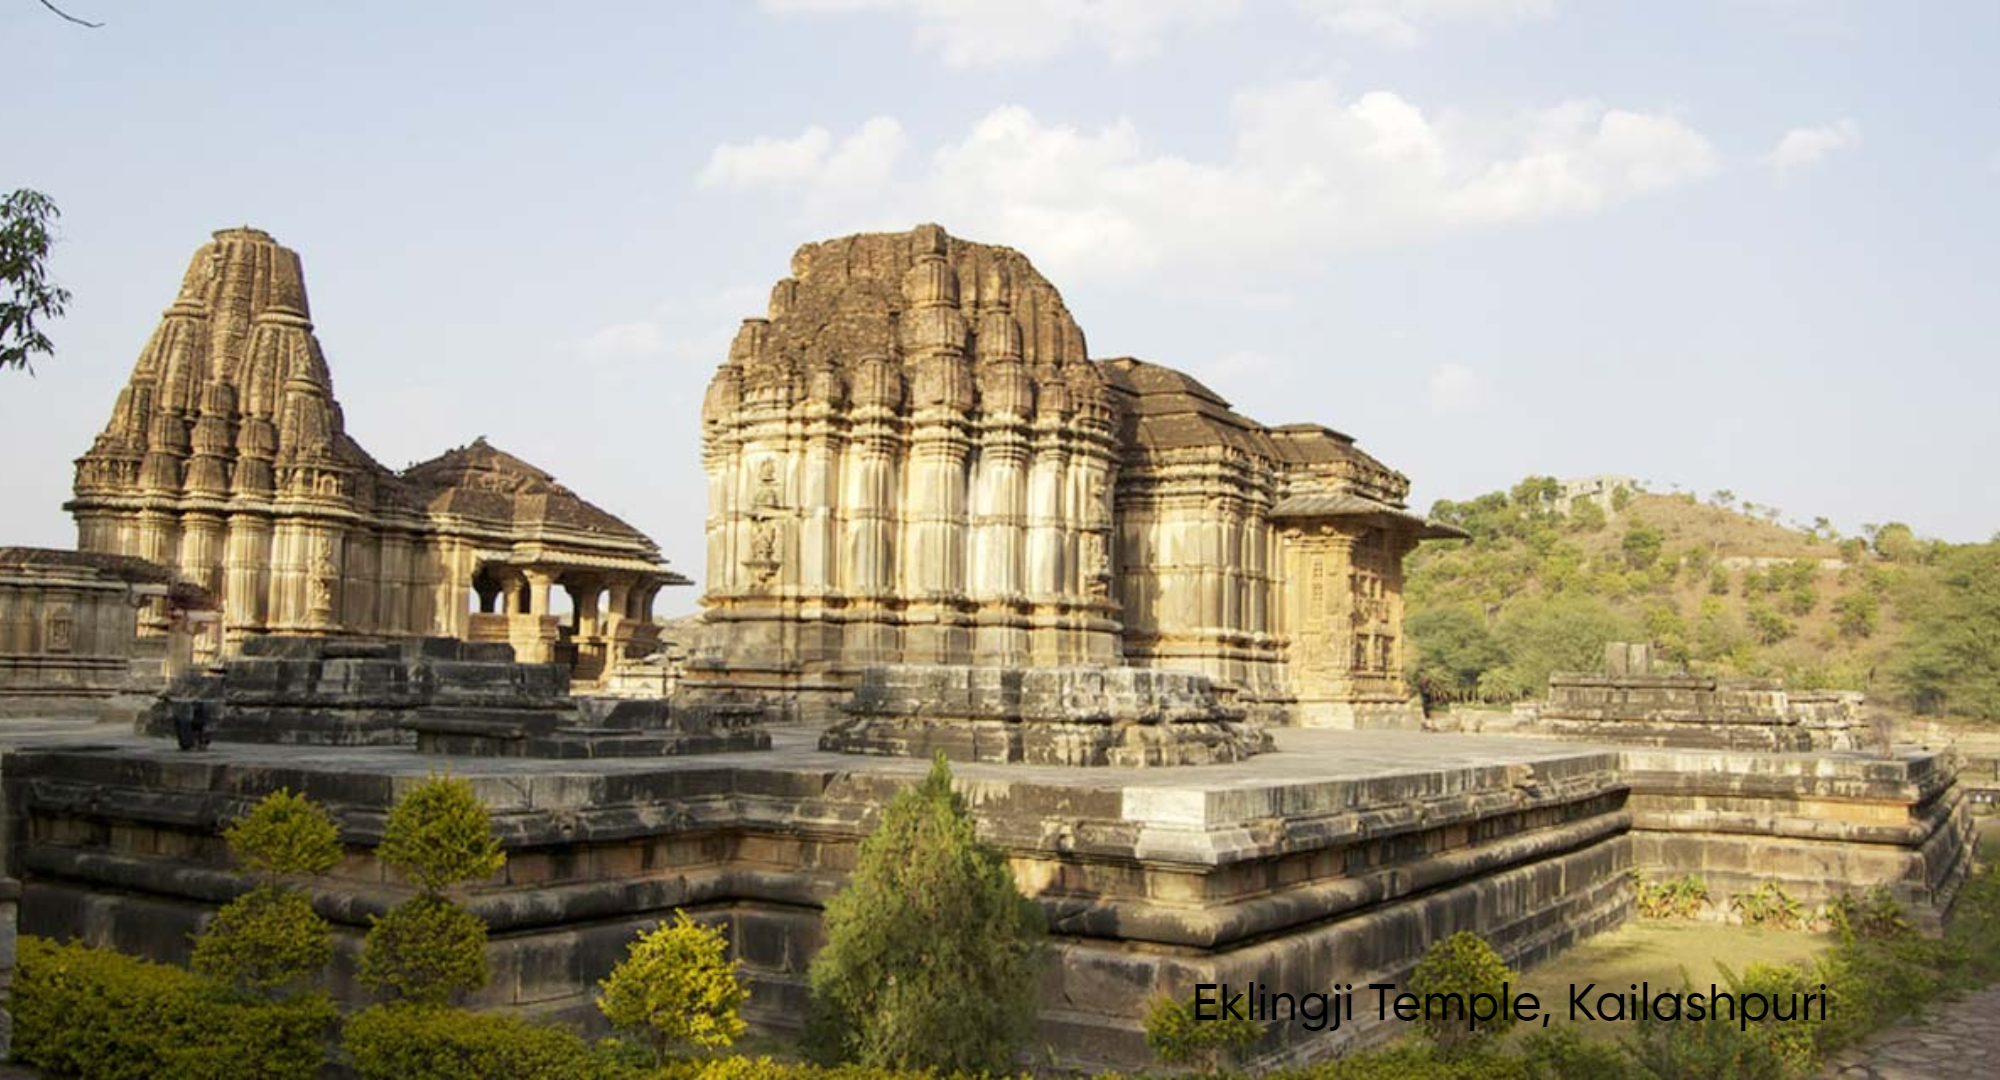 Eklingji-Temple-Kailashpuri-Udaipur.jpg